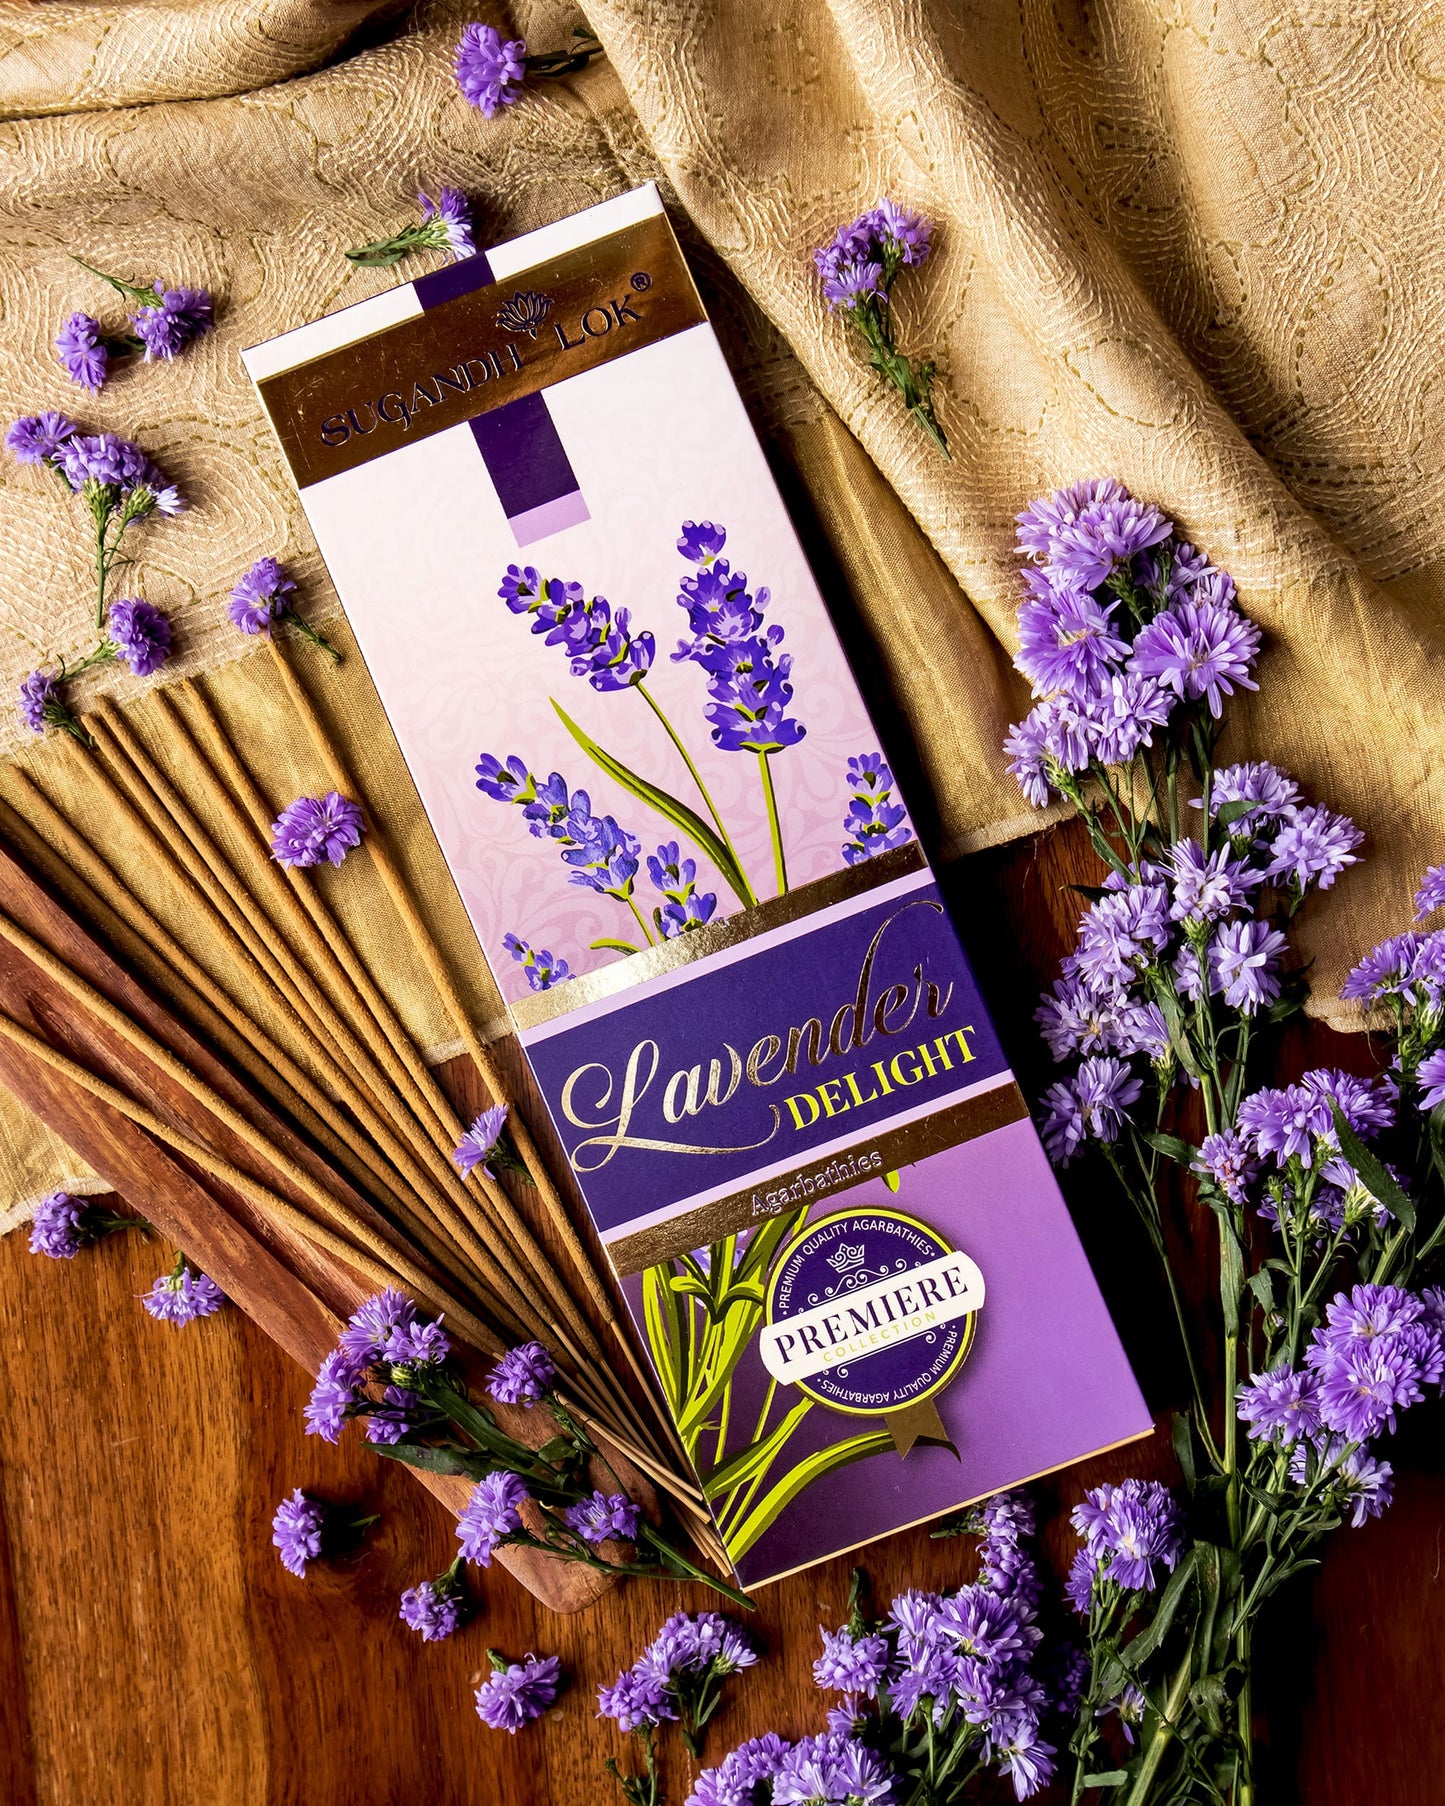 Lavender Delight Agarbatti Box surrounded by lavender flowers & incense sticks